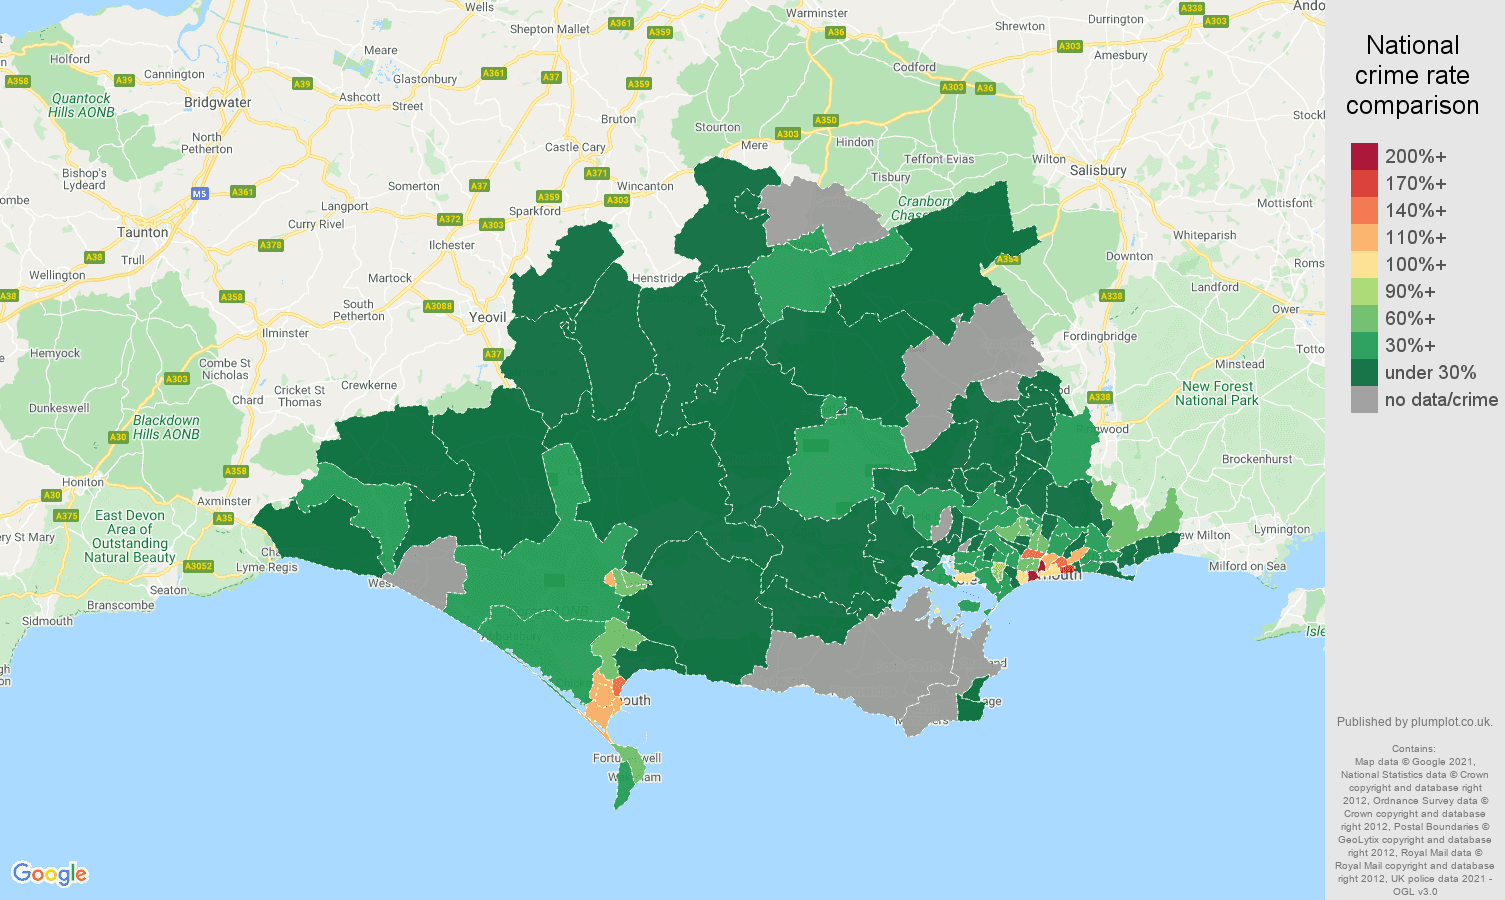 Dorset drugs crime rate comparison map